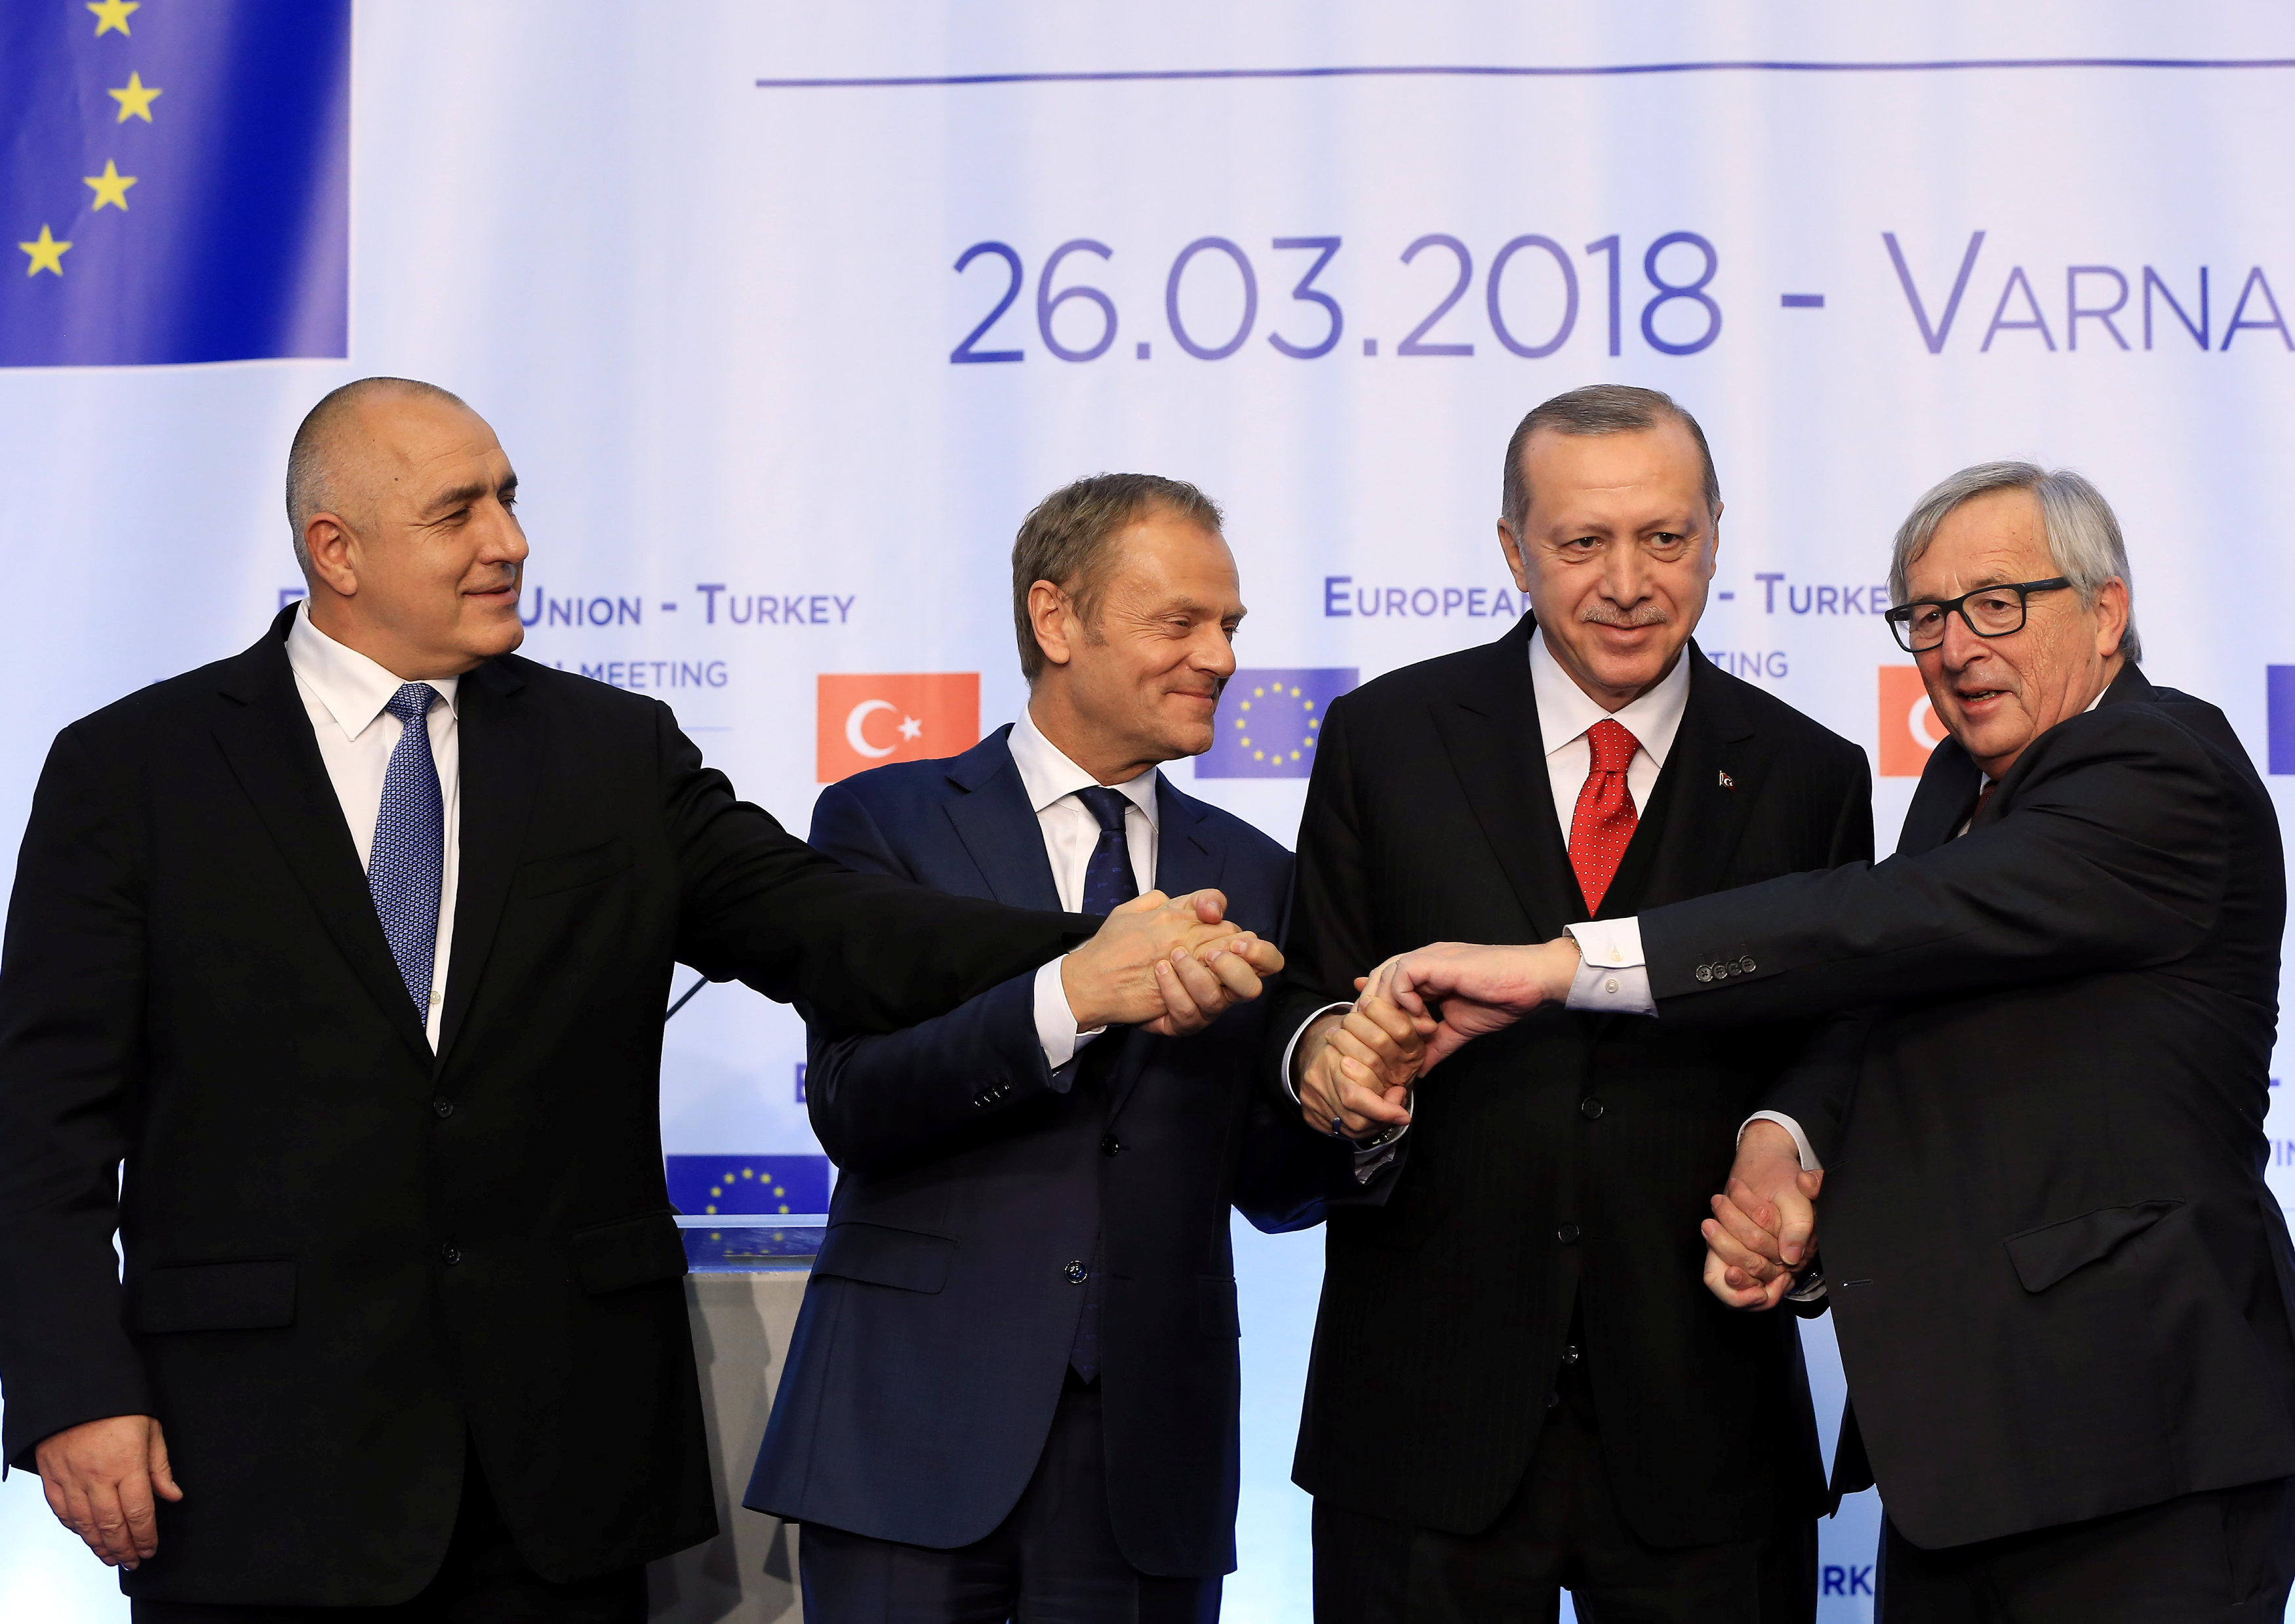 Tusk, Juncker pressure Erdogan at EU-Turkey summit